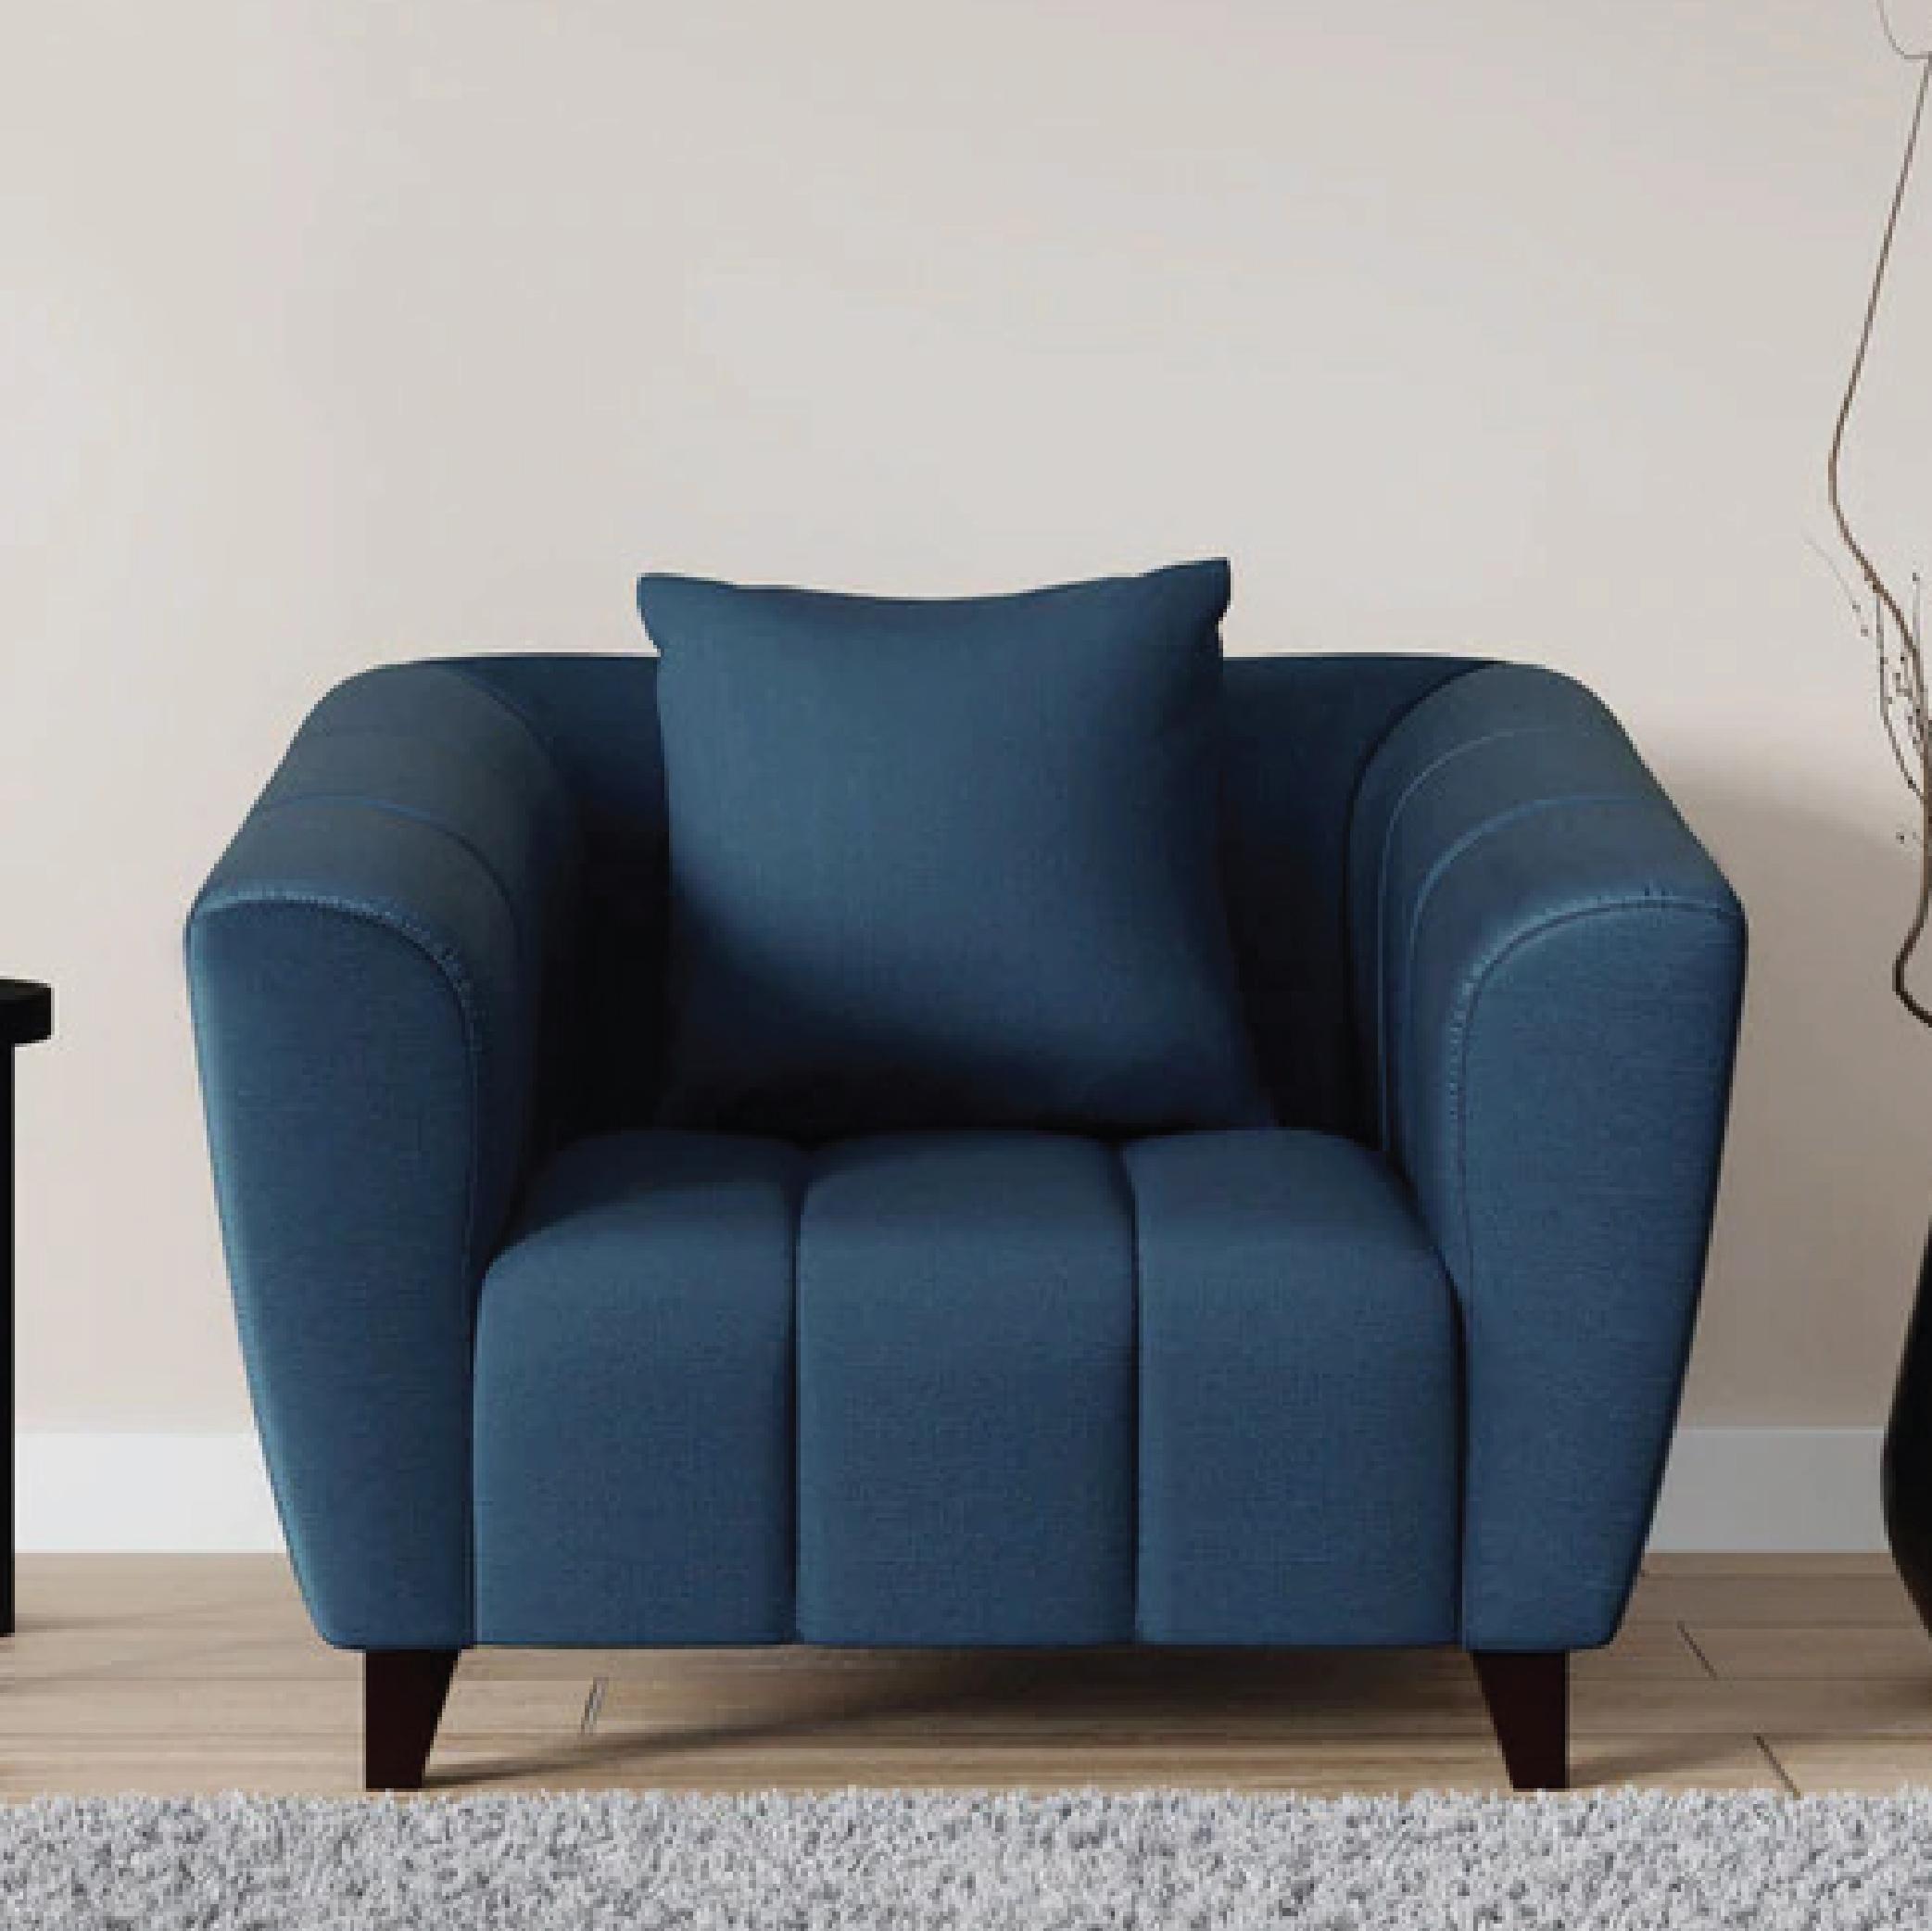 Bobbio One Seater Sofa in Blue Colour